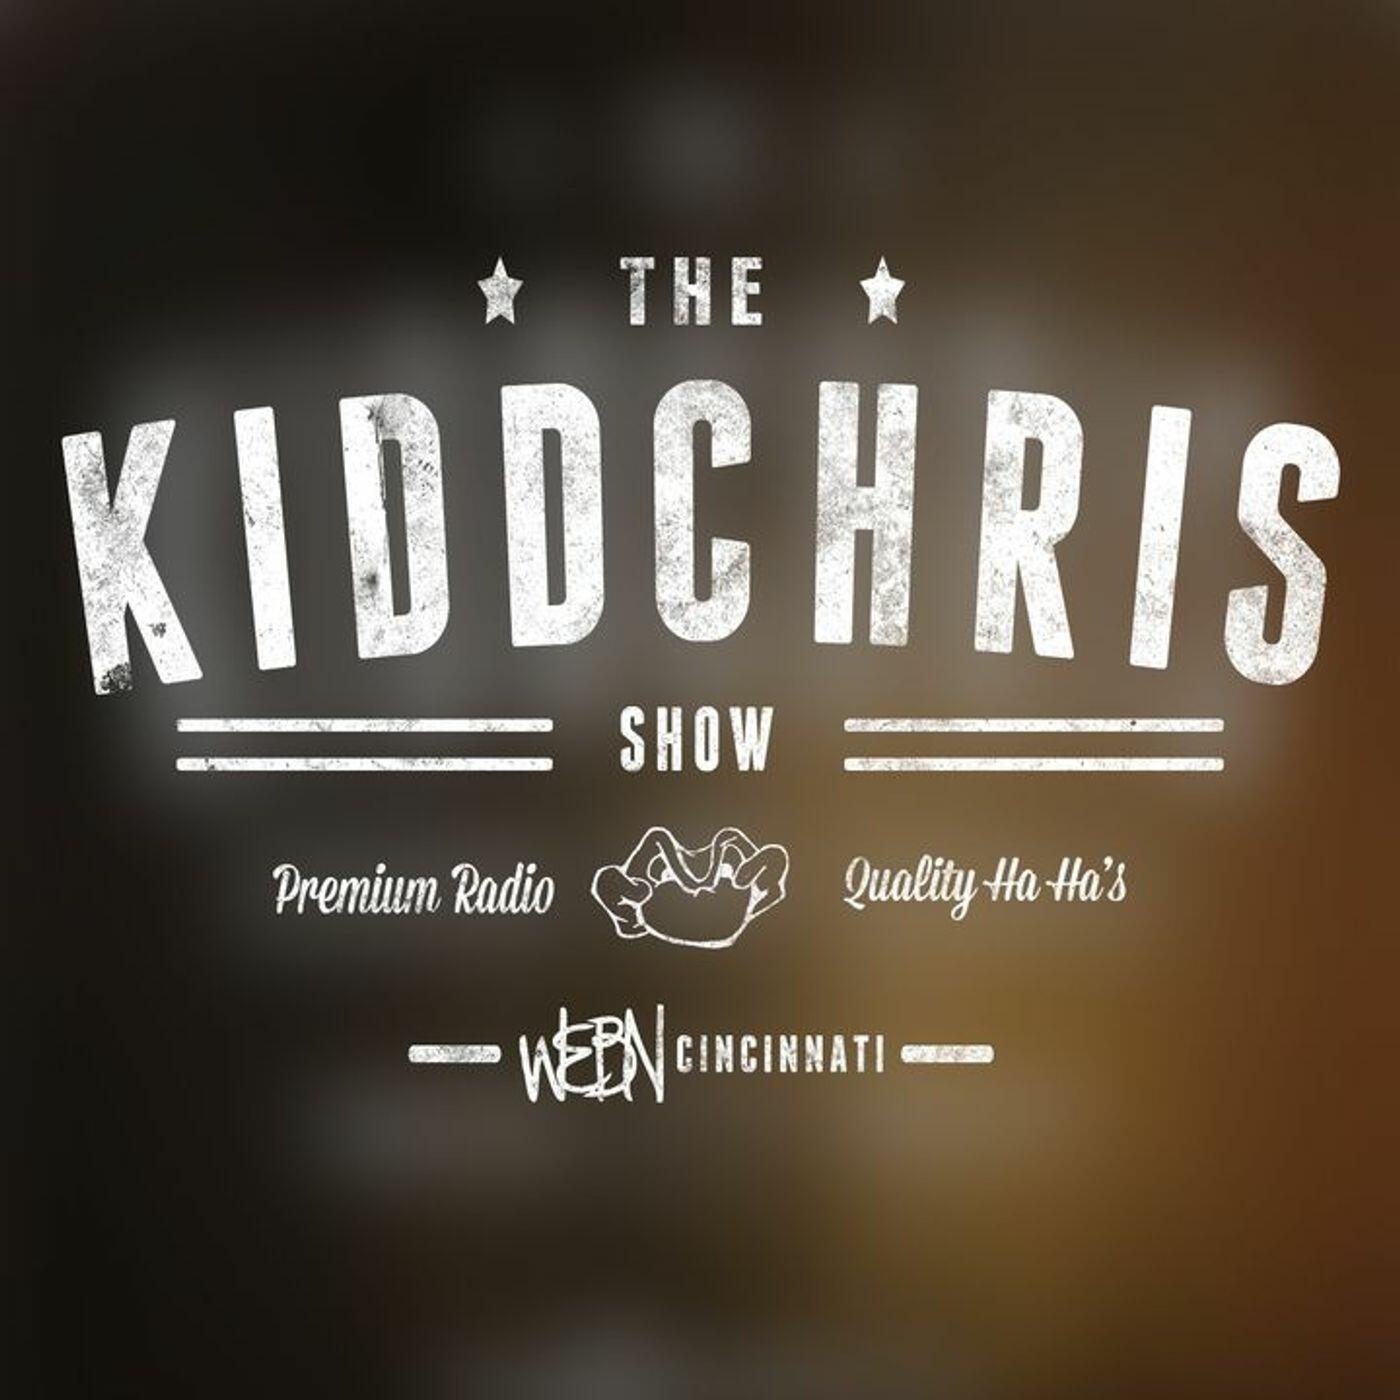 The KiddChris Show - WEBN